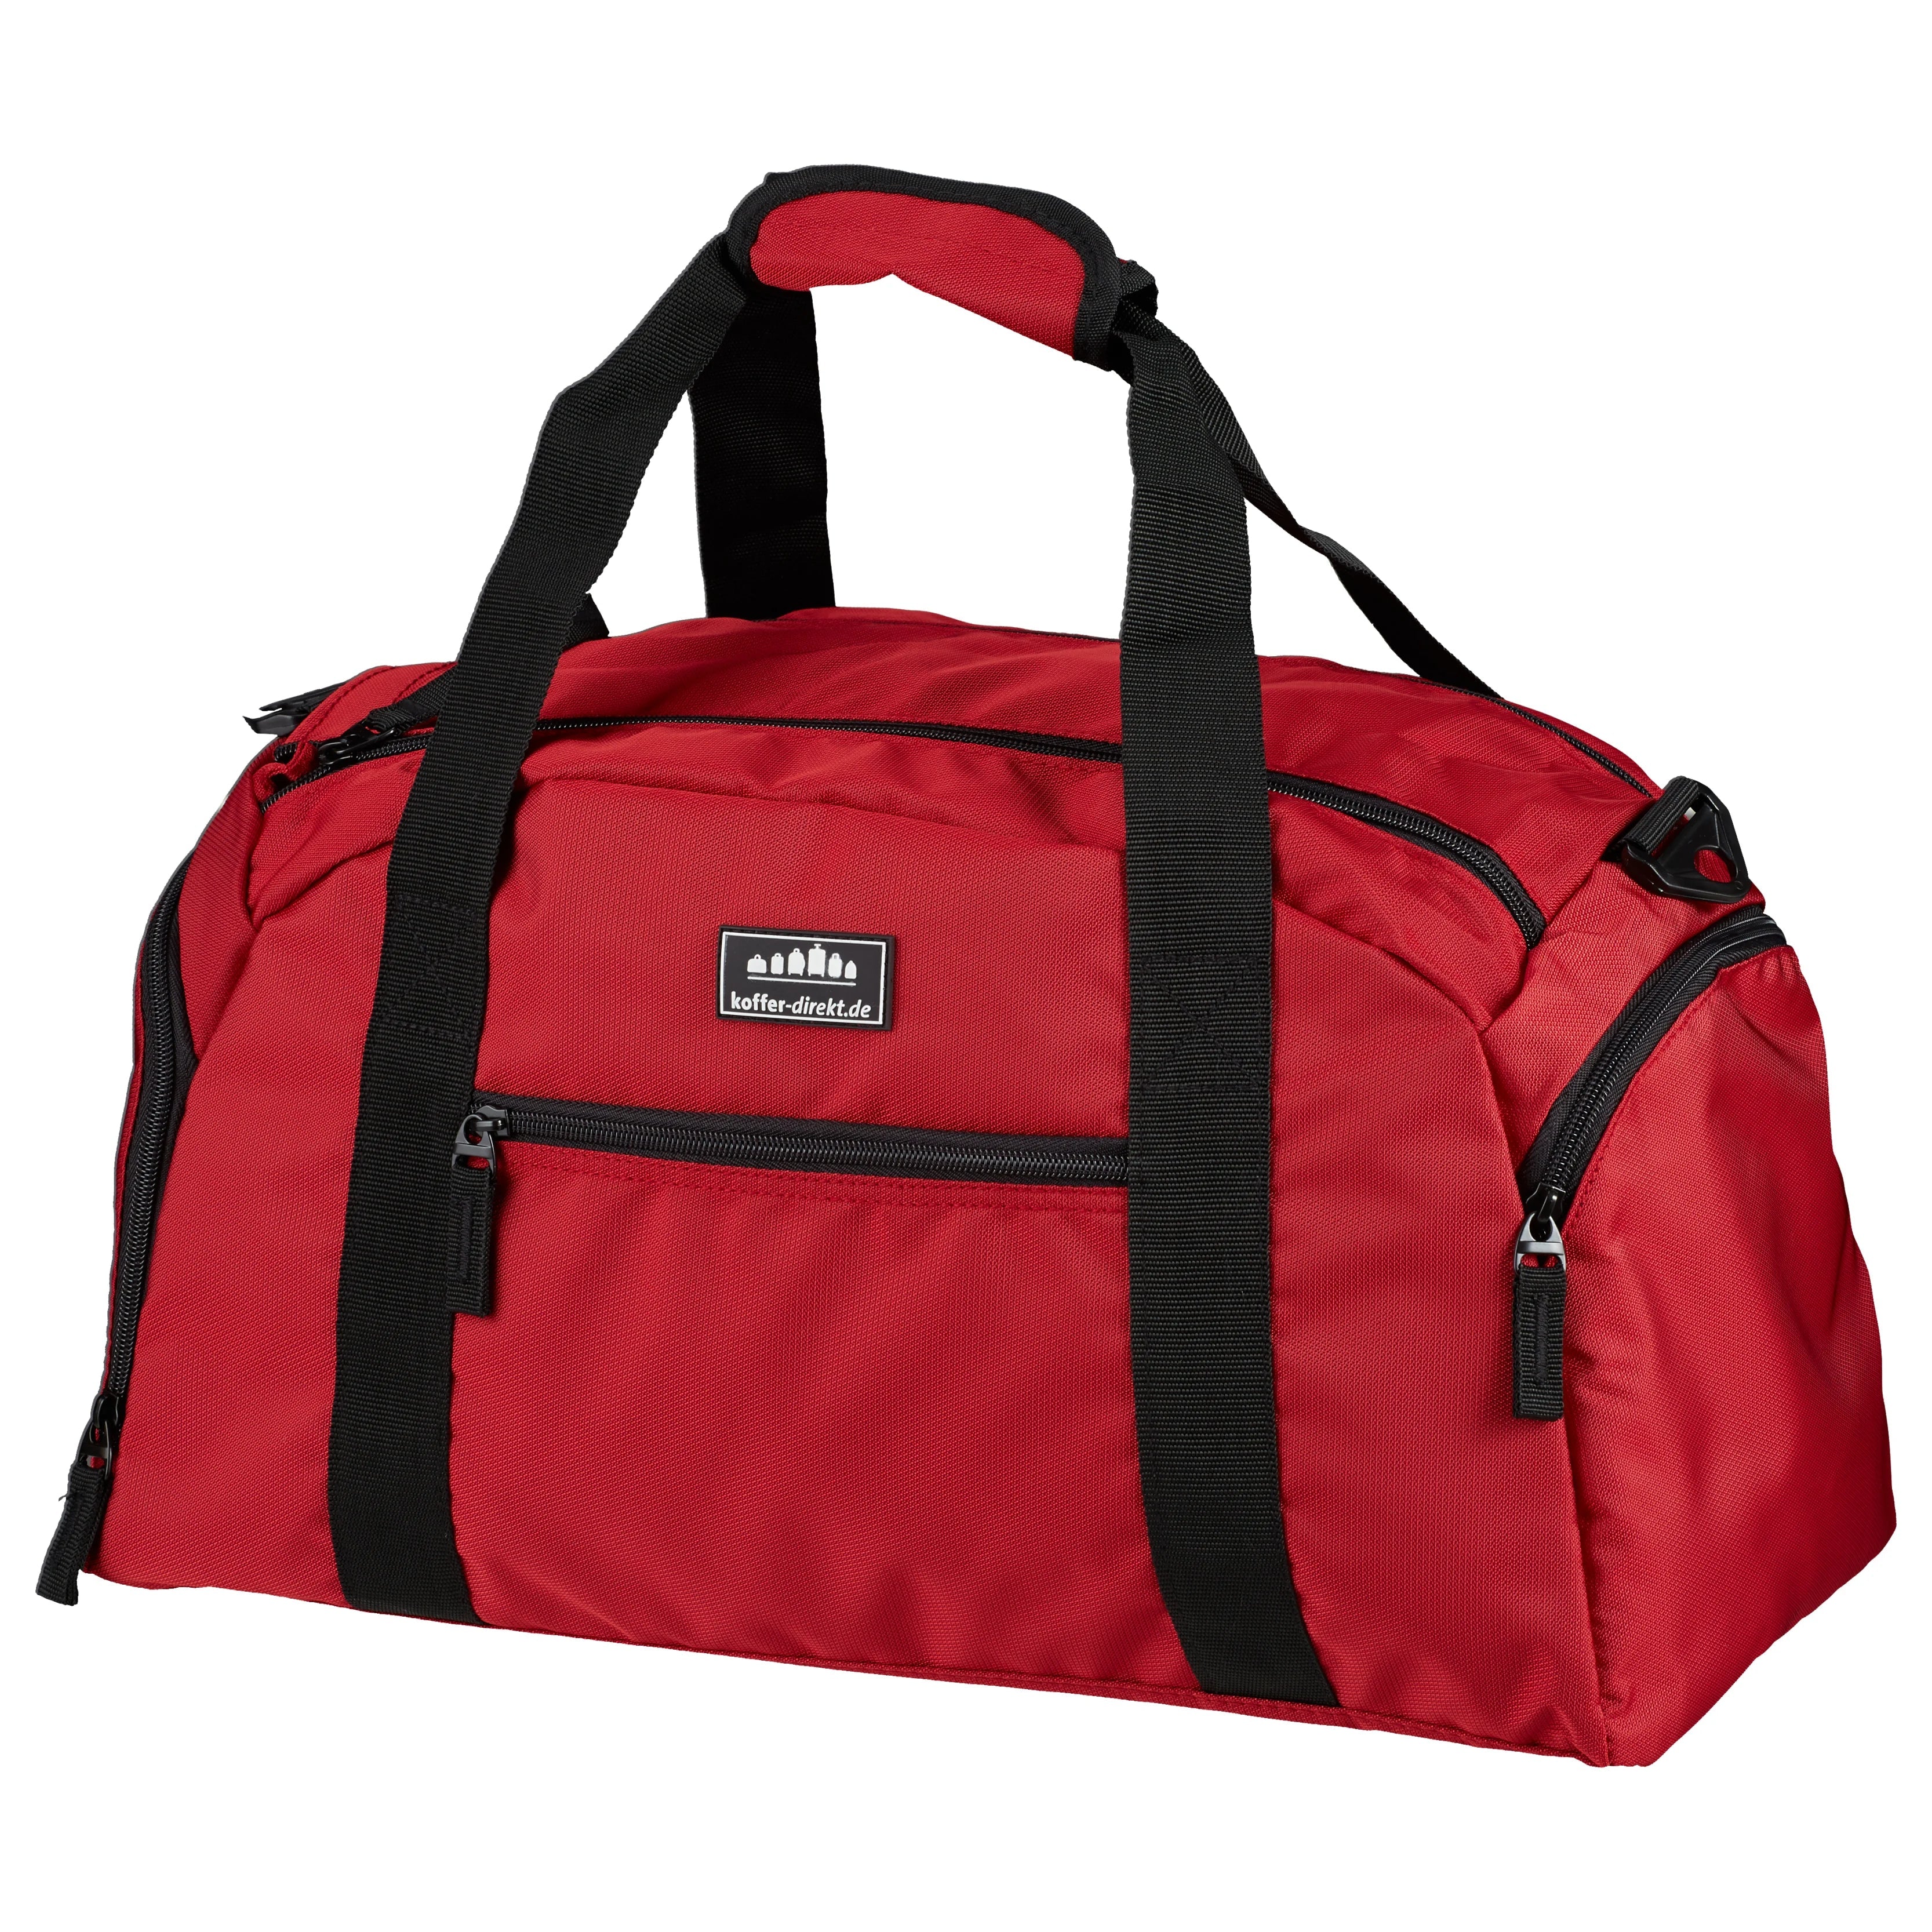 koffer-direkt.de Light Travel II Travel bag 46 cm - dark red